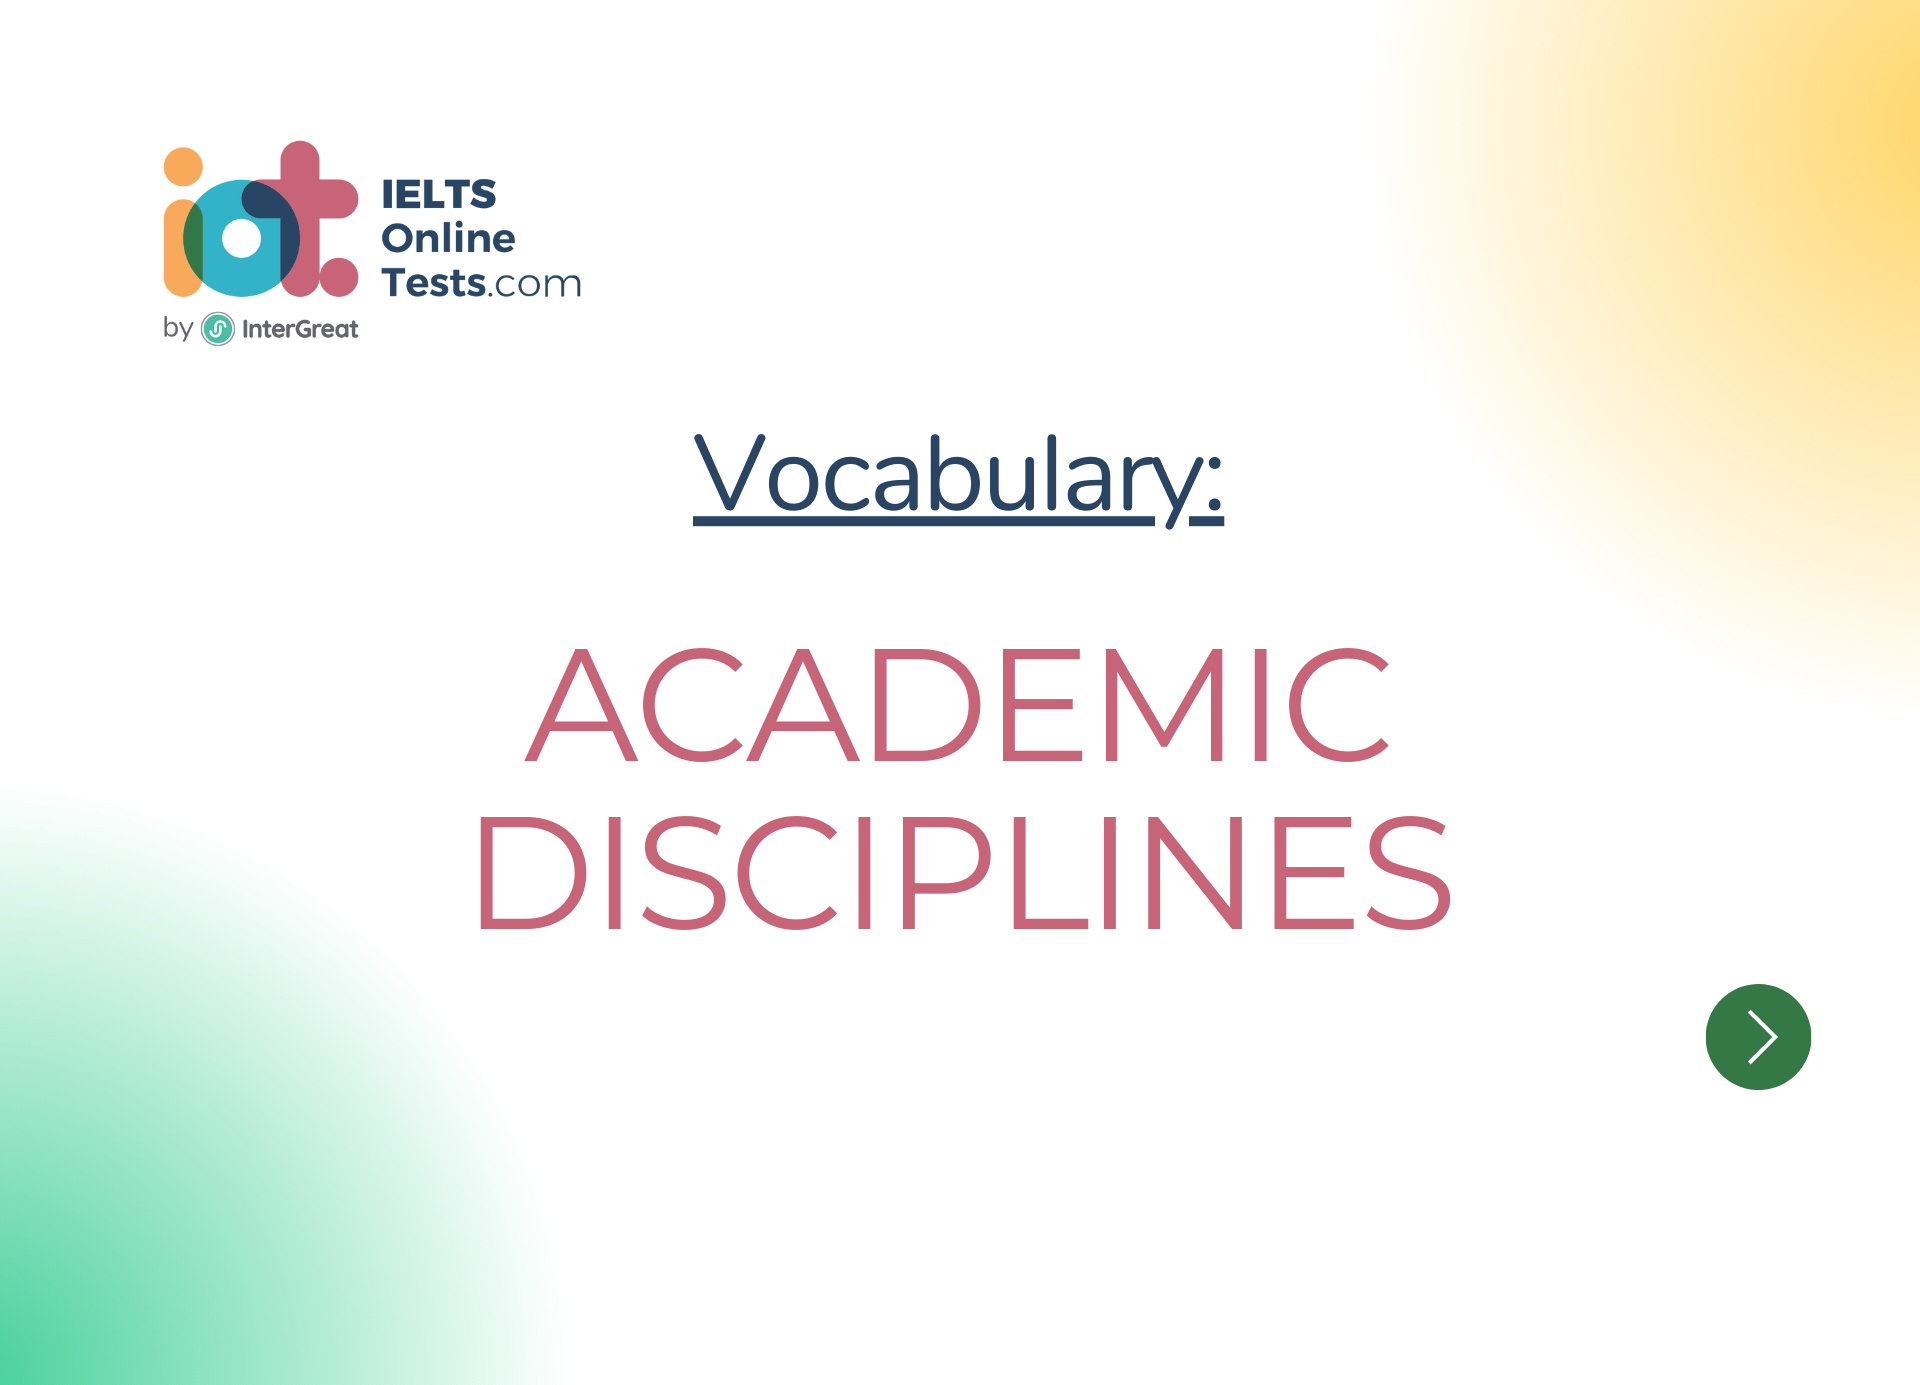 Academic disciplines